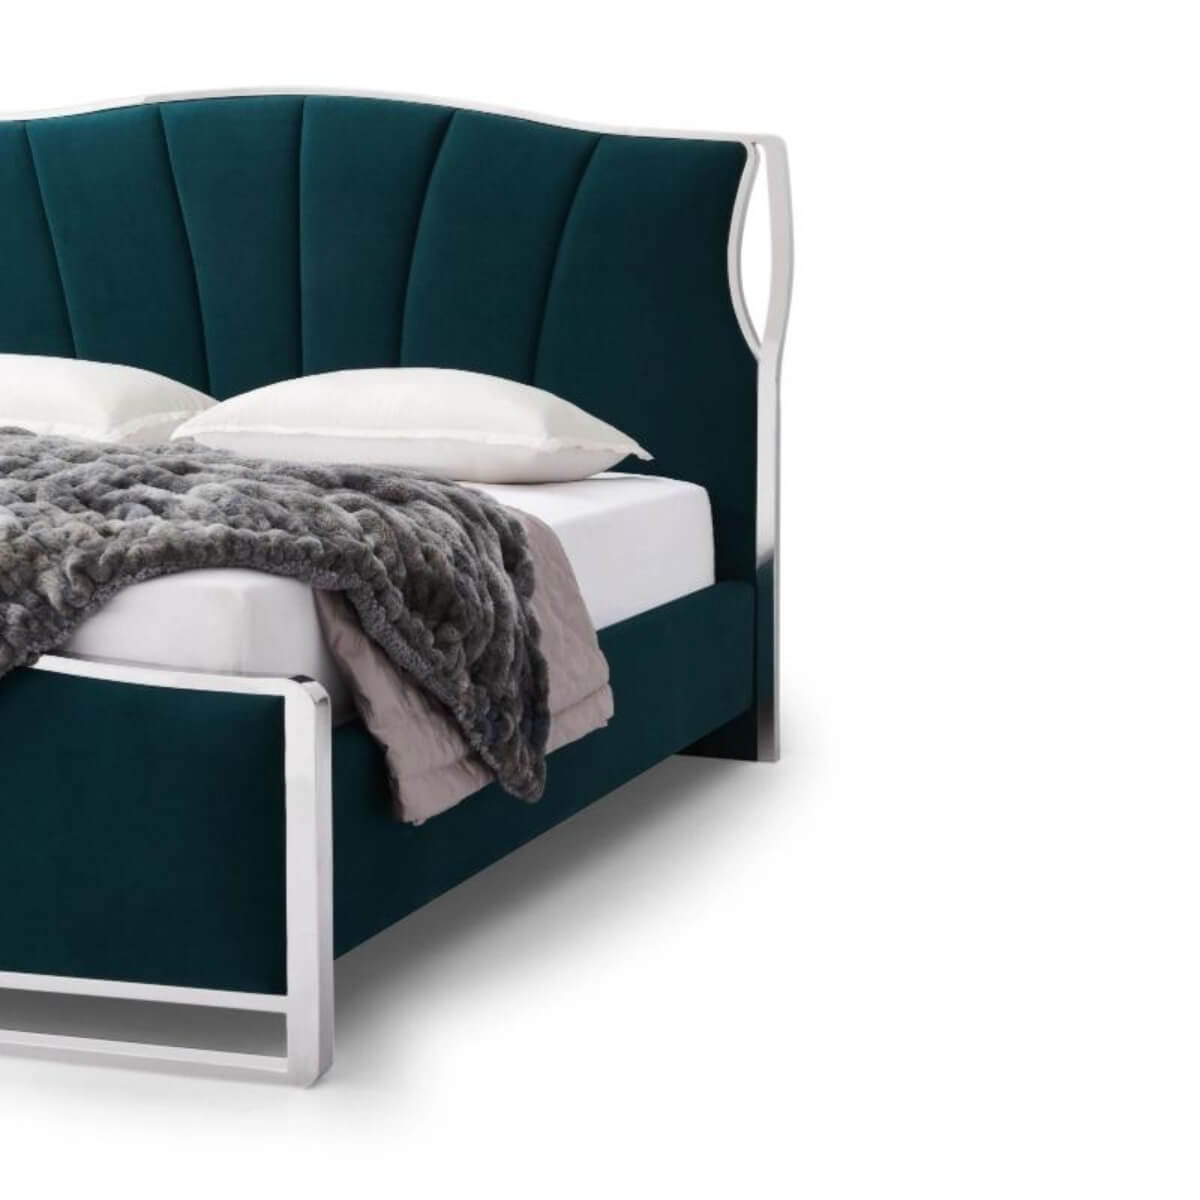 StarryNight Luxurious Velvet Bed